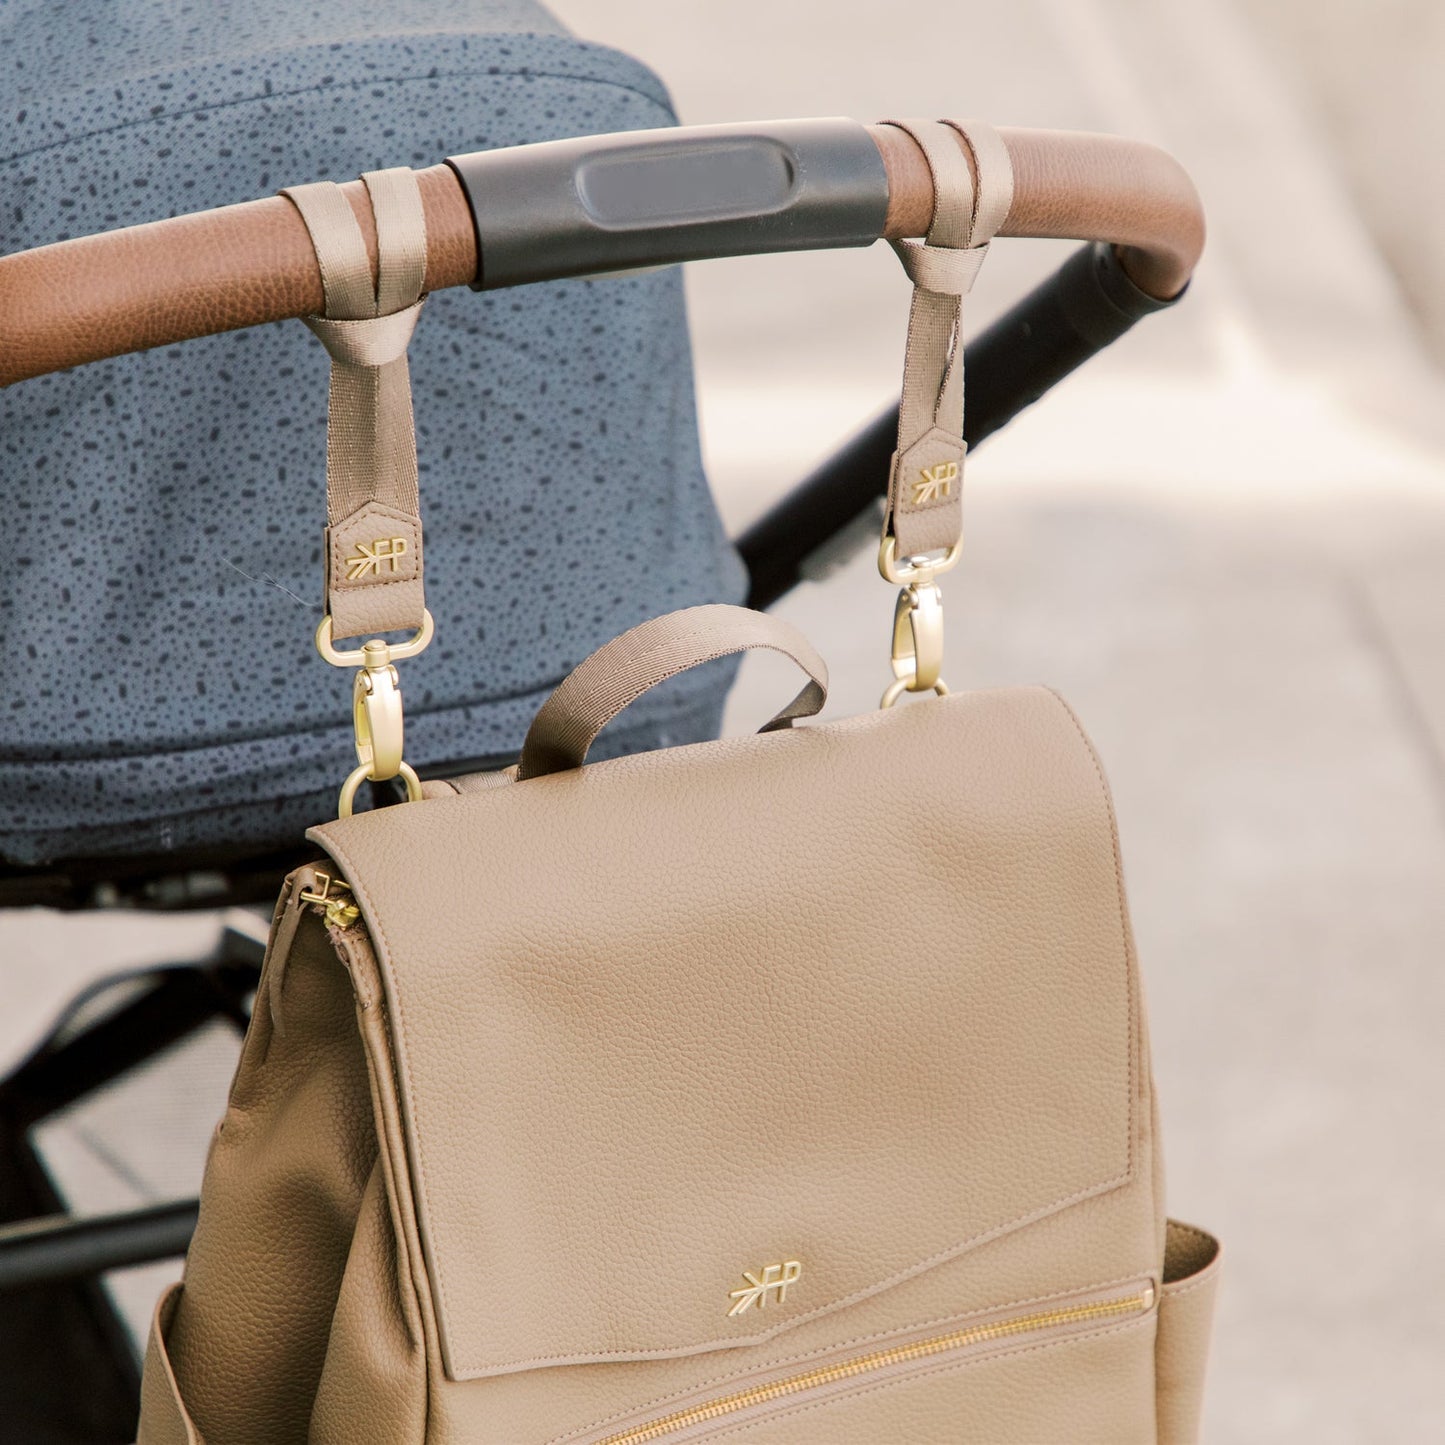 Aspen Classic Stroller Clip Stroller Clips Bag Accessory 